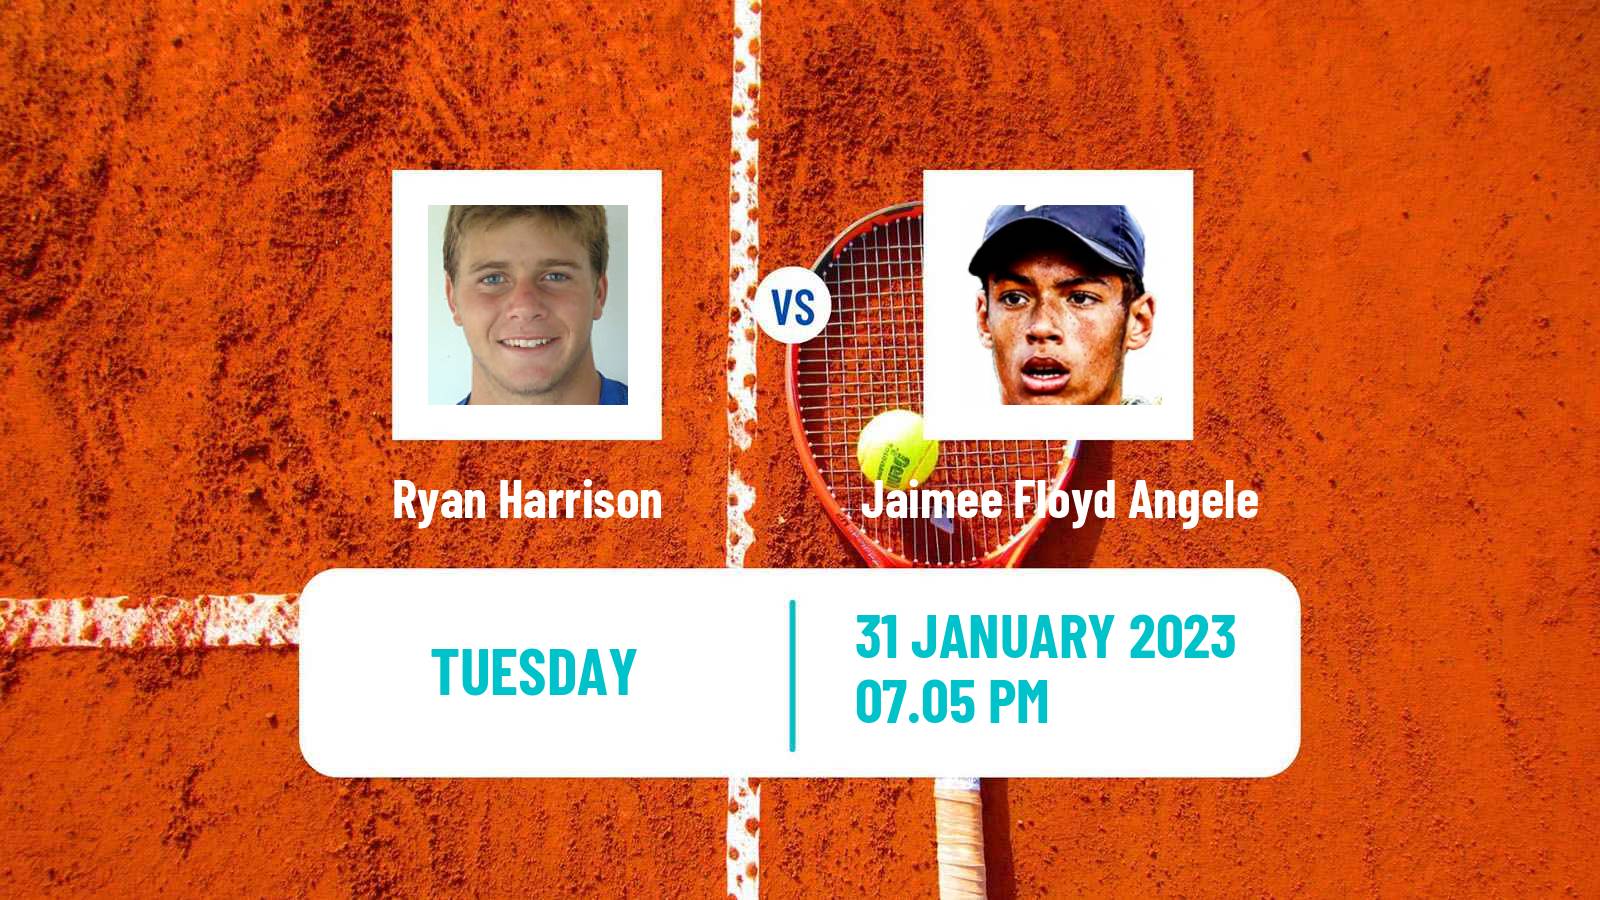 Tennis ATP Challenger Ryan Harrison - Jaimee Floyd Angele